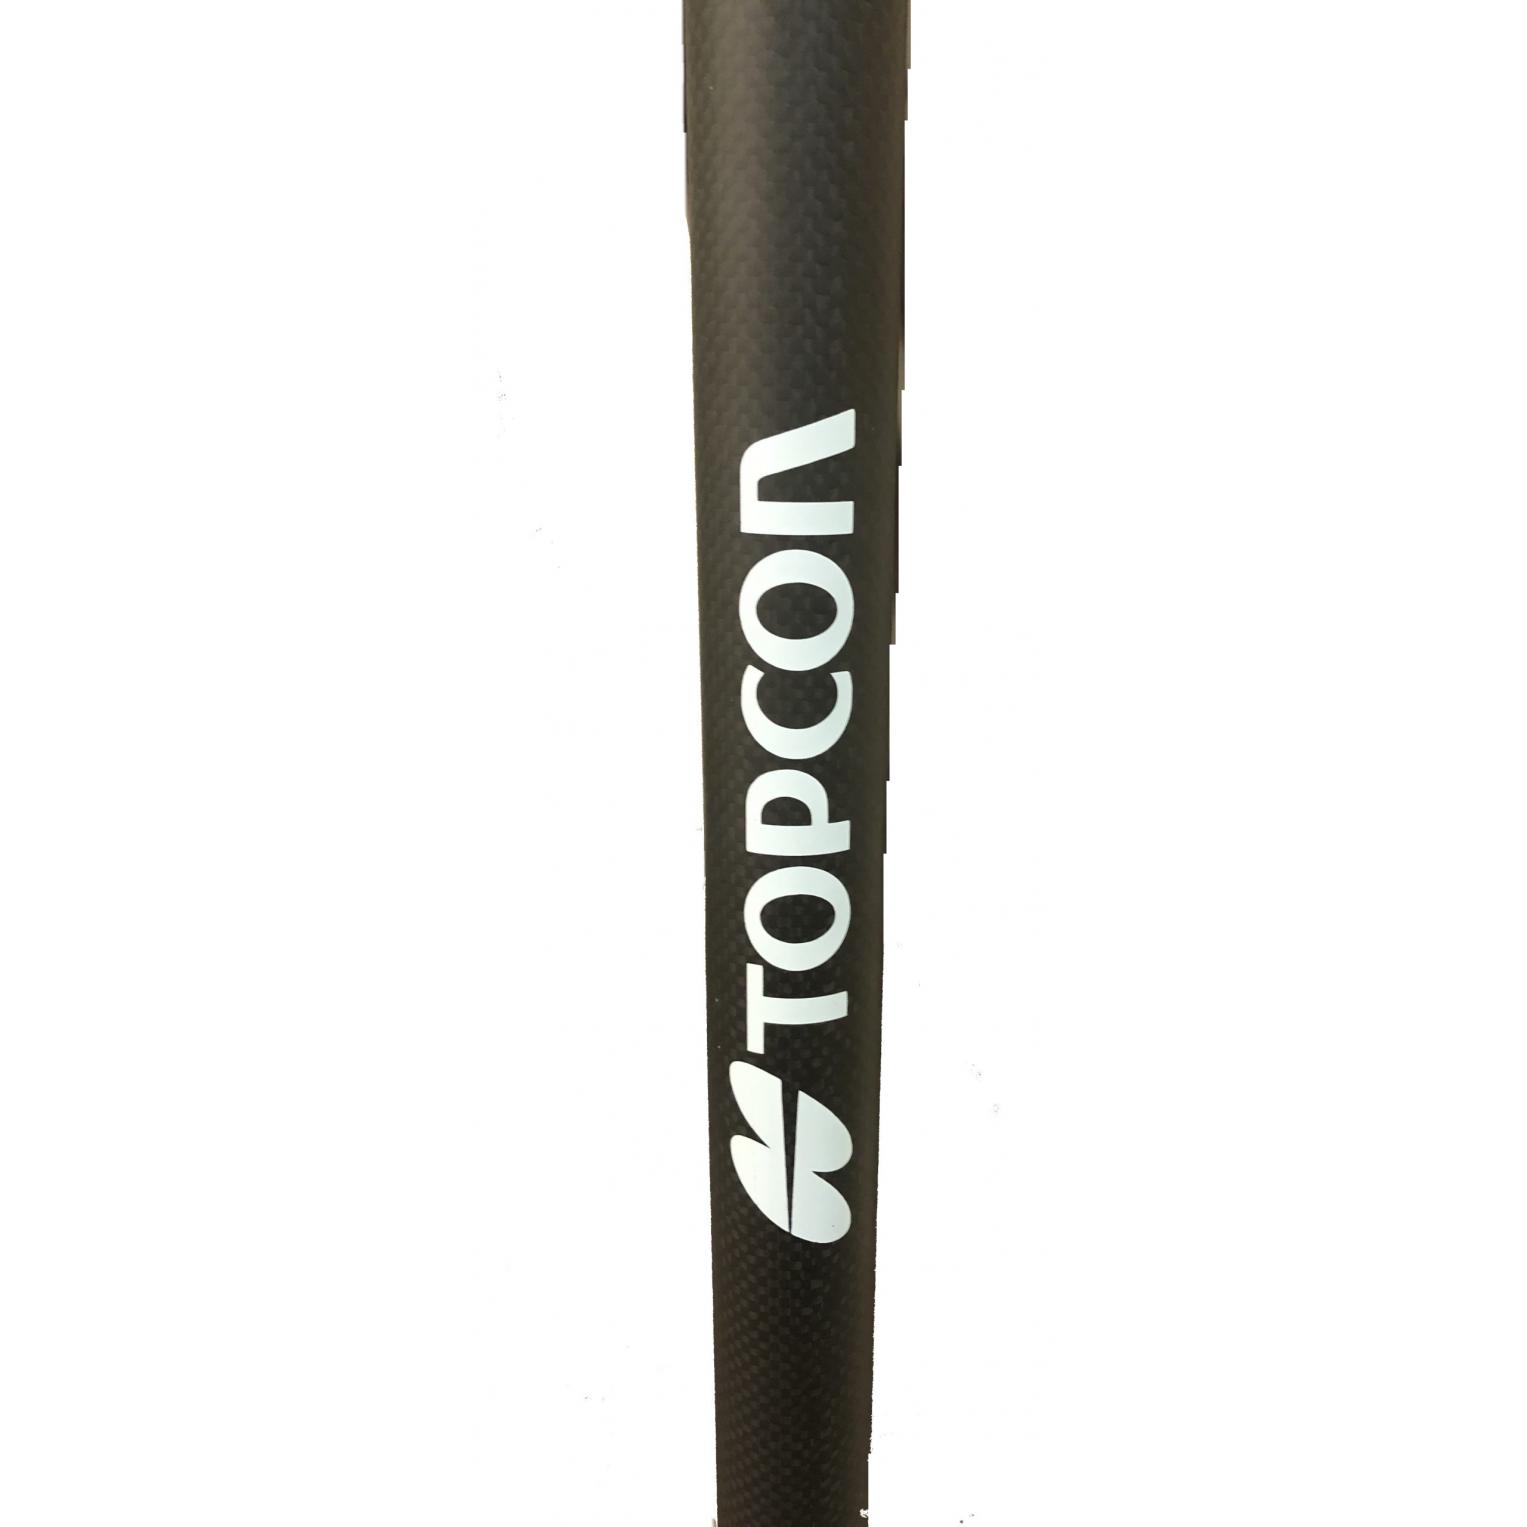 Topcon Carbon Pole c